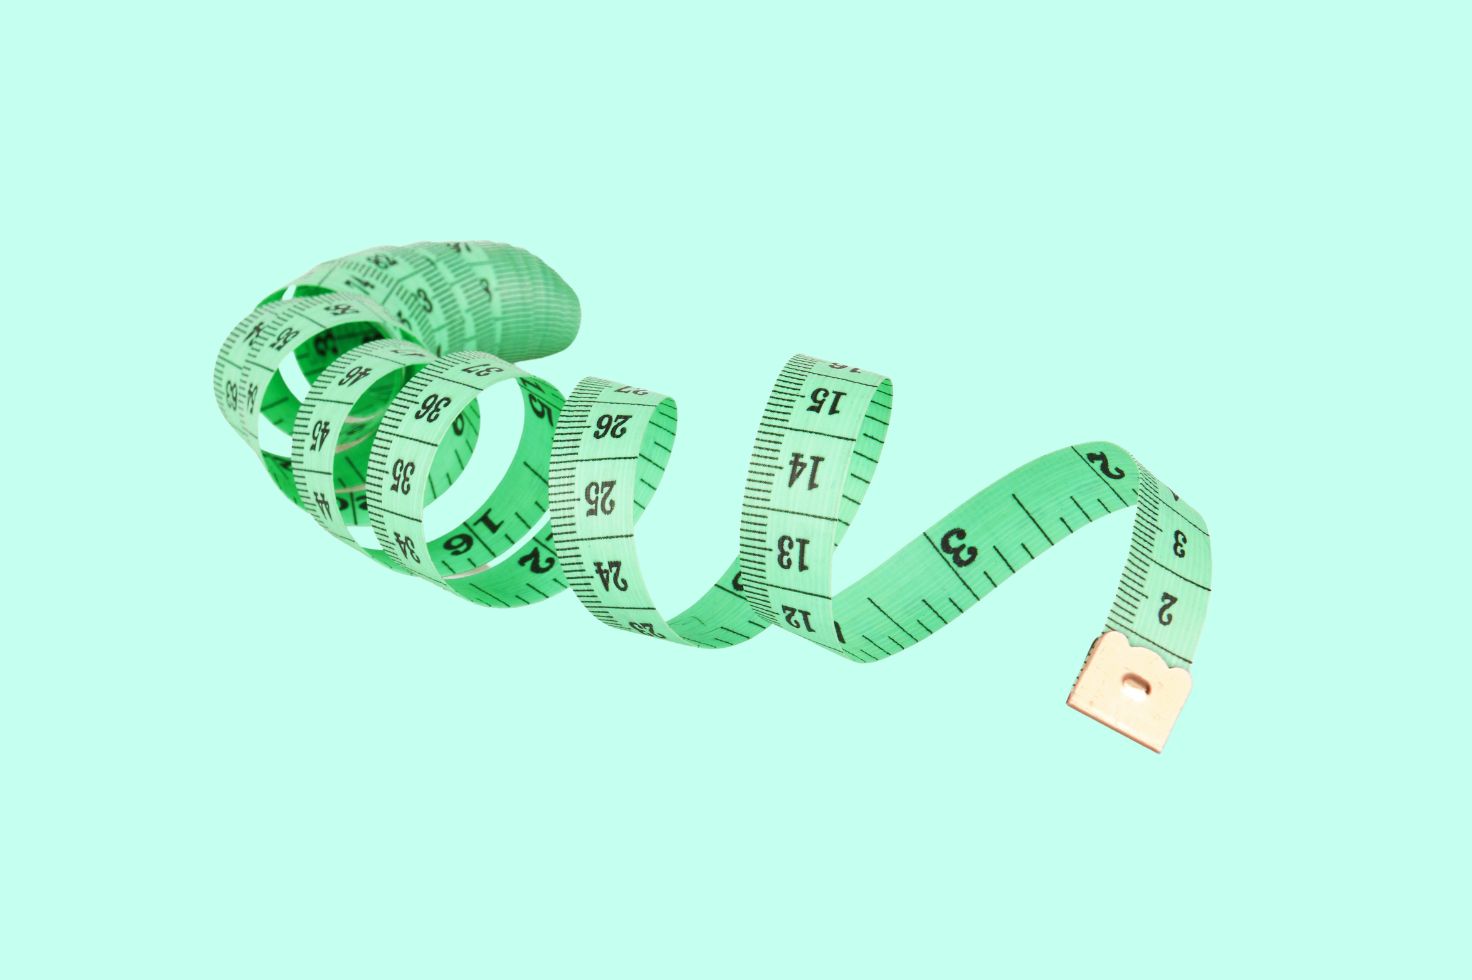 email marketing data - green measuring tape